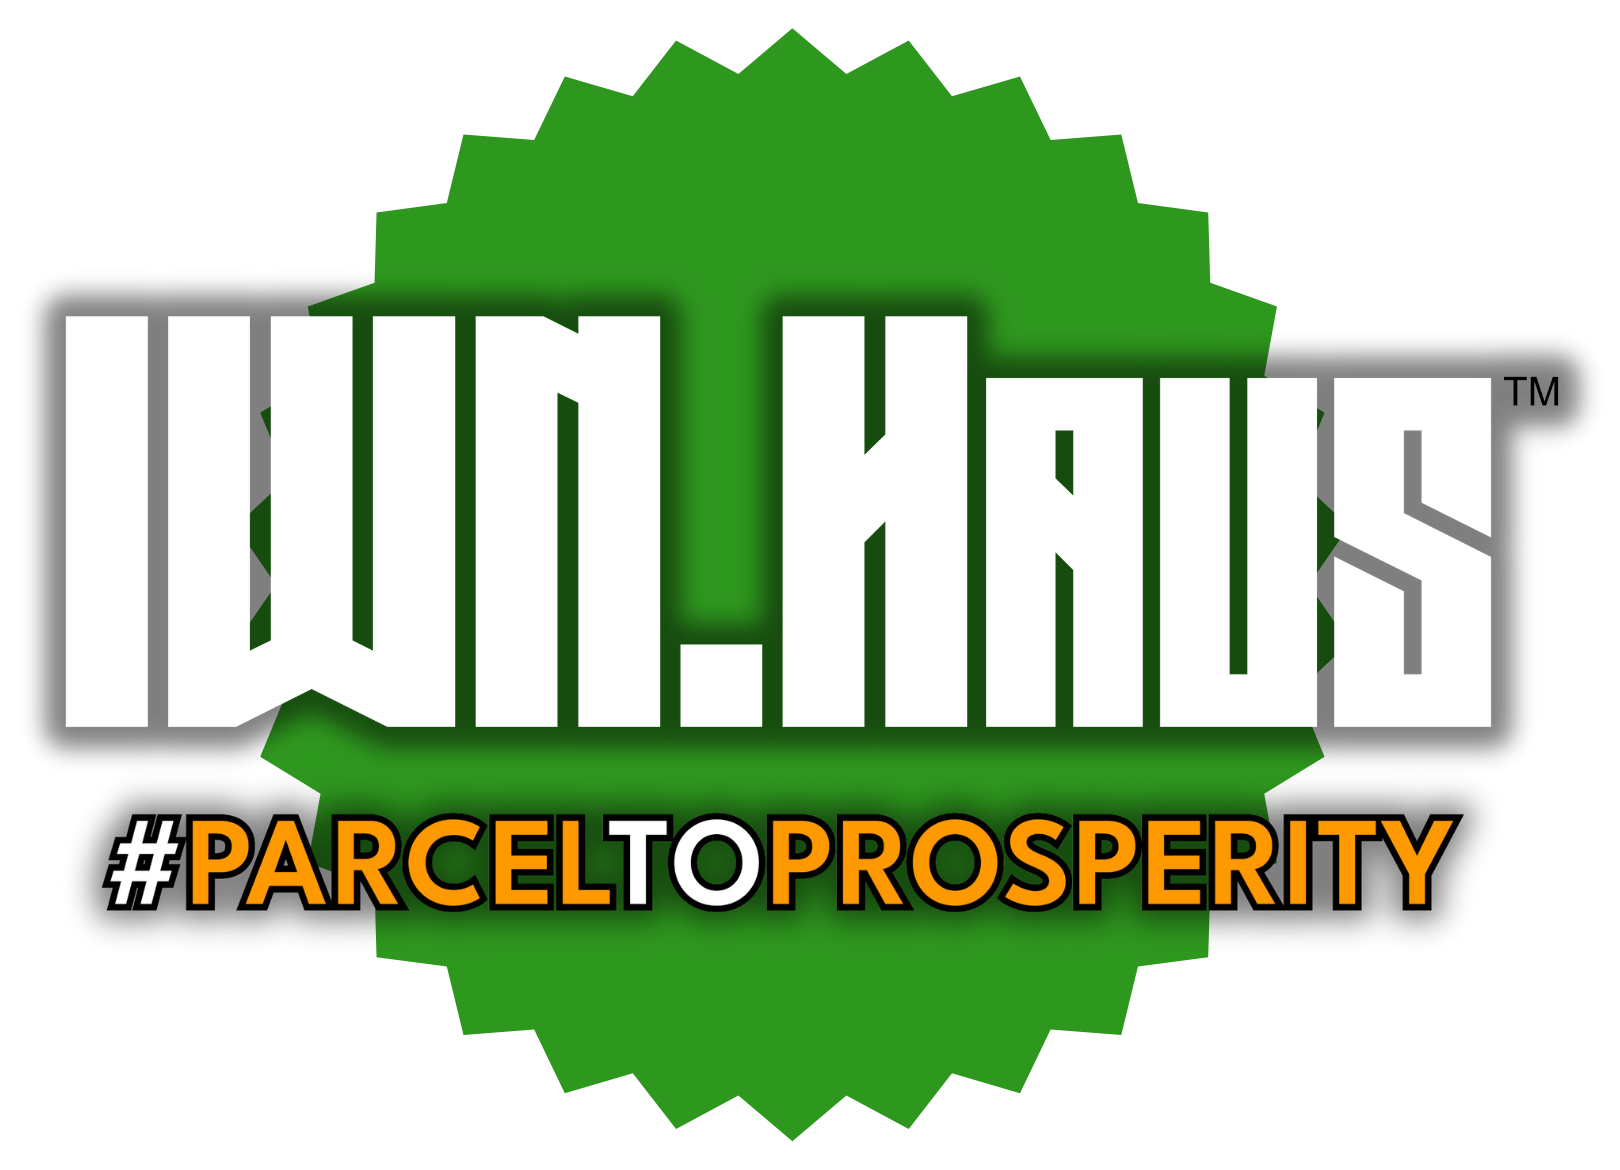 IWN.Haus #ParcelToProsperity Logo